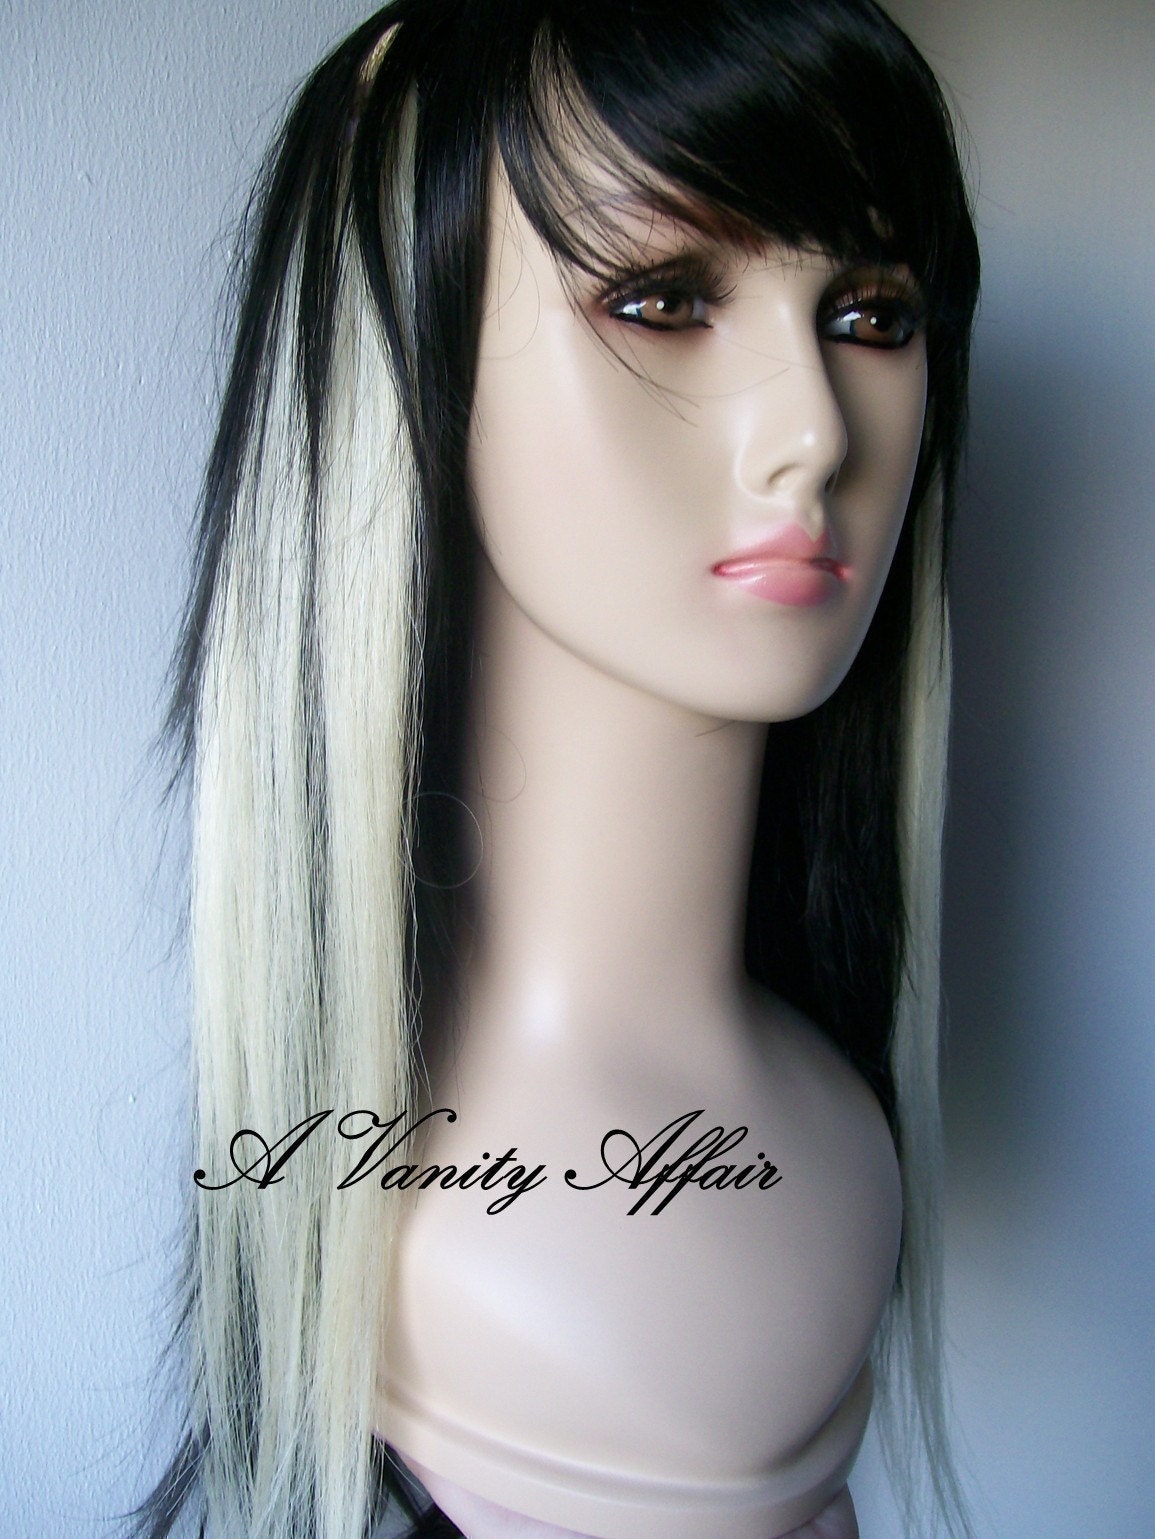 Blonde Scene Hair Extensions. Platinum Blonde Human Hair Extensions 18 Inches Pair Clip In. From AVanityAffair